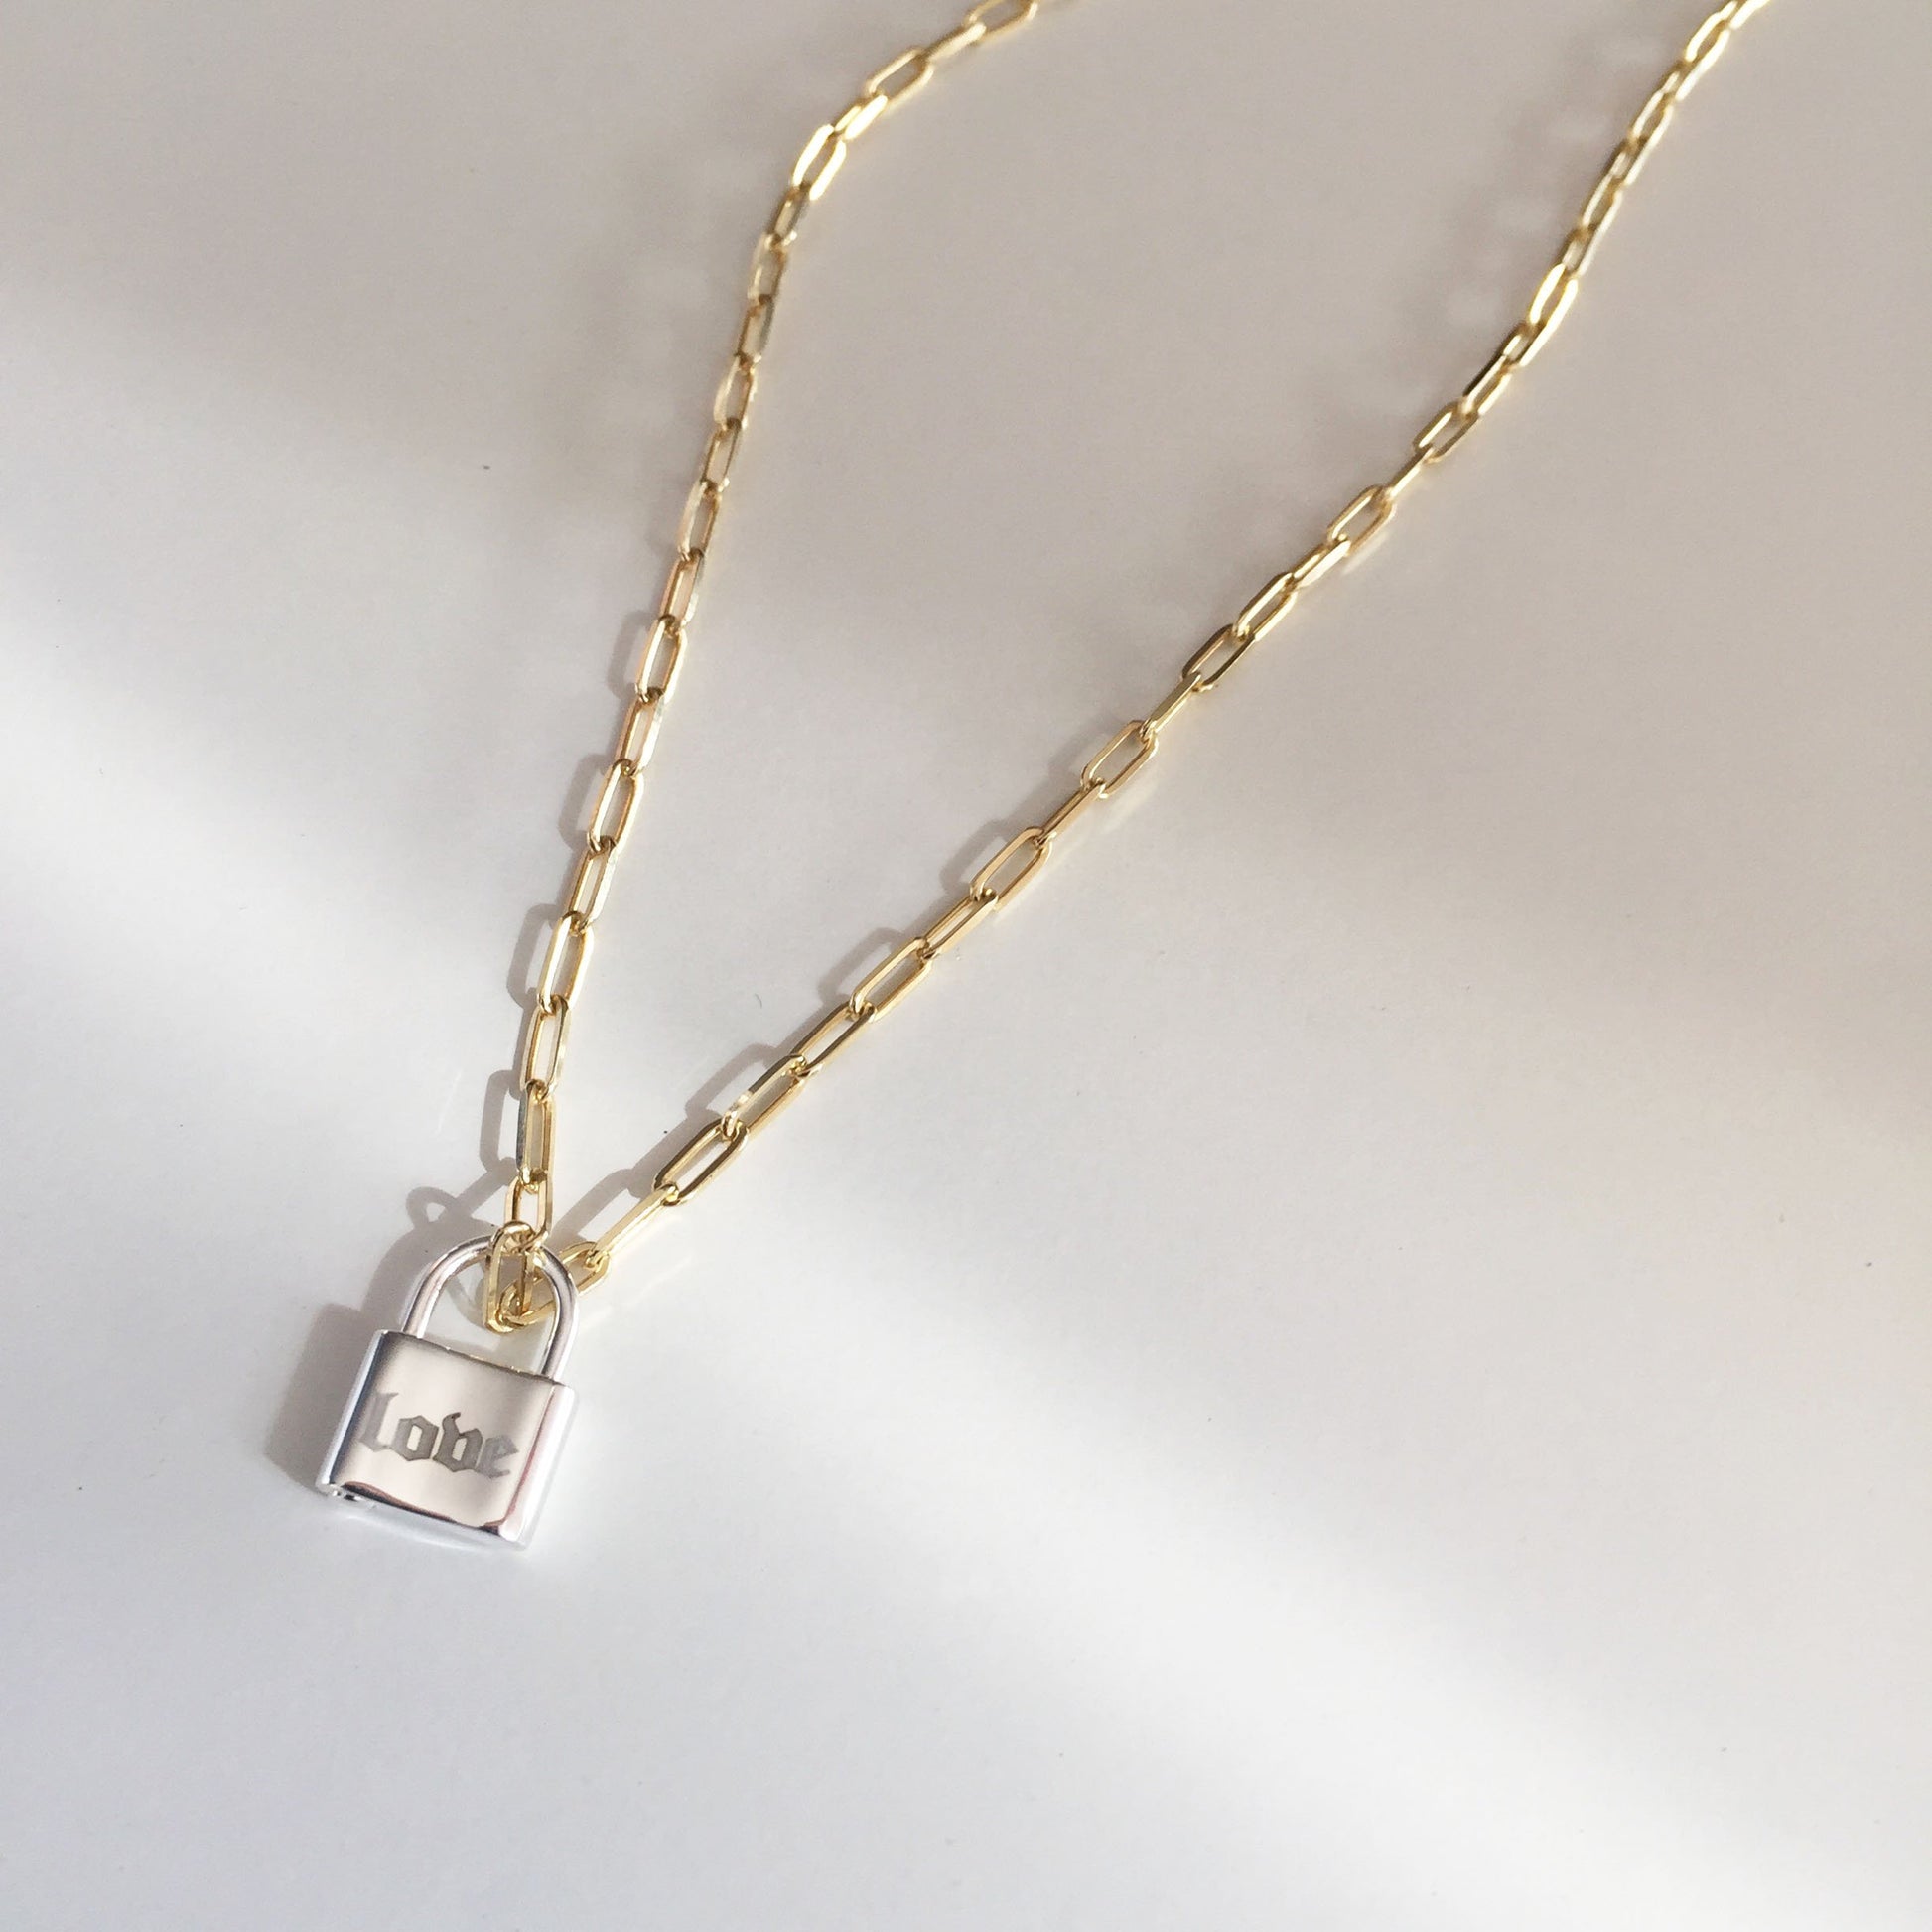 Zakally Custom Padlock Necklace Personalized Engraved Lock Necklace for Men Women (sty1)